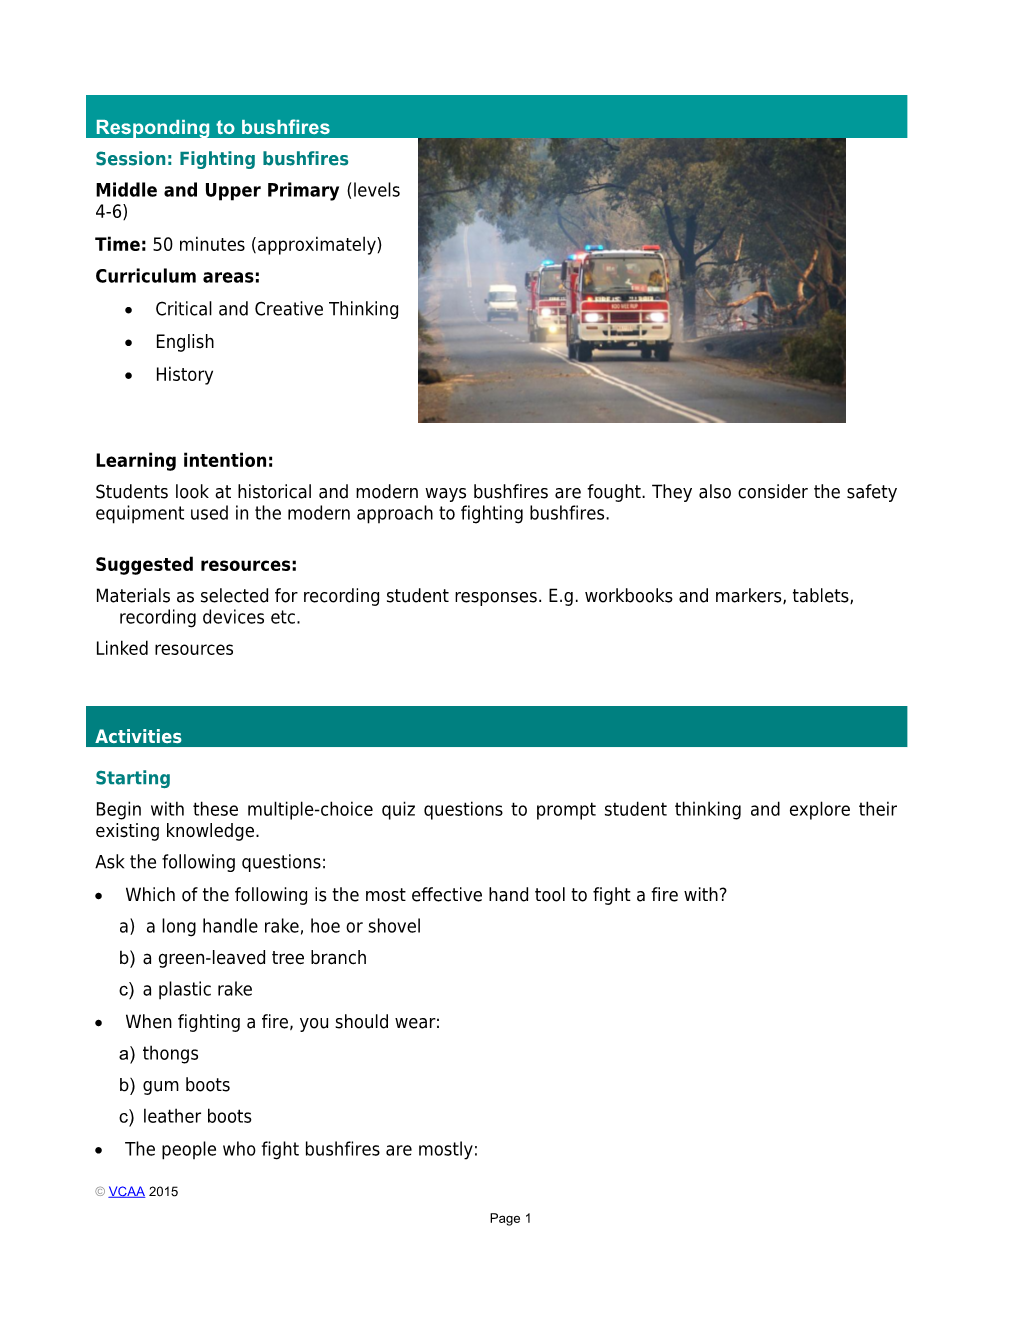 Responding to Bushfires: Fighting Bushfires